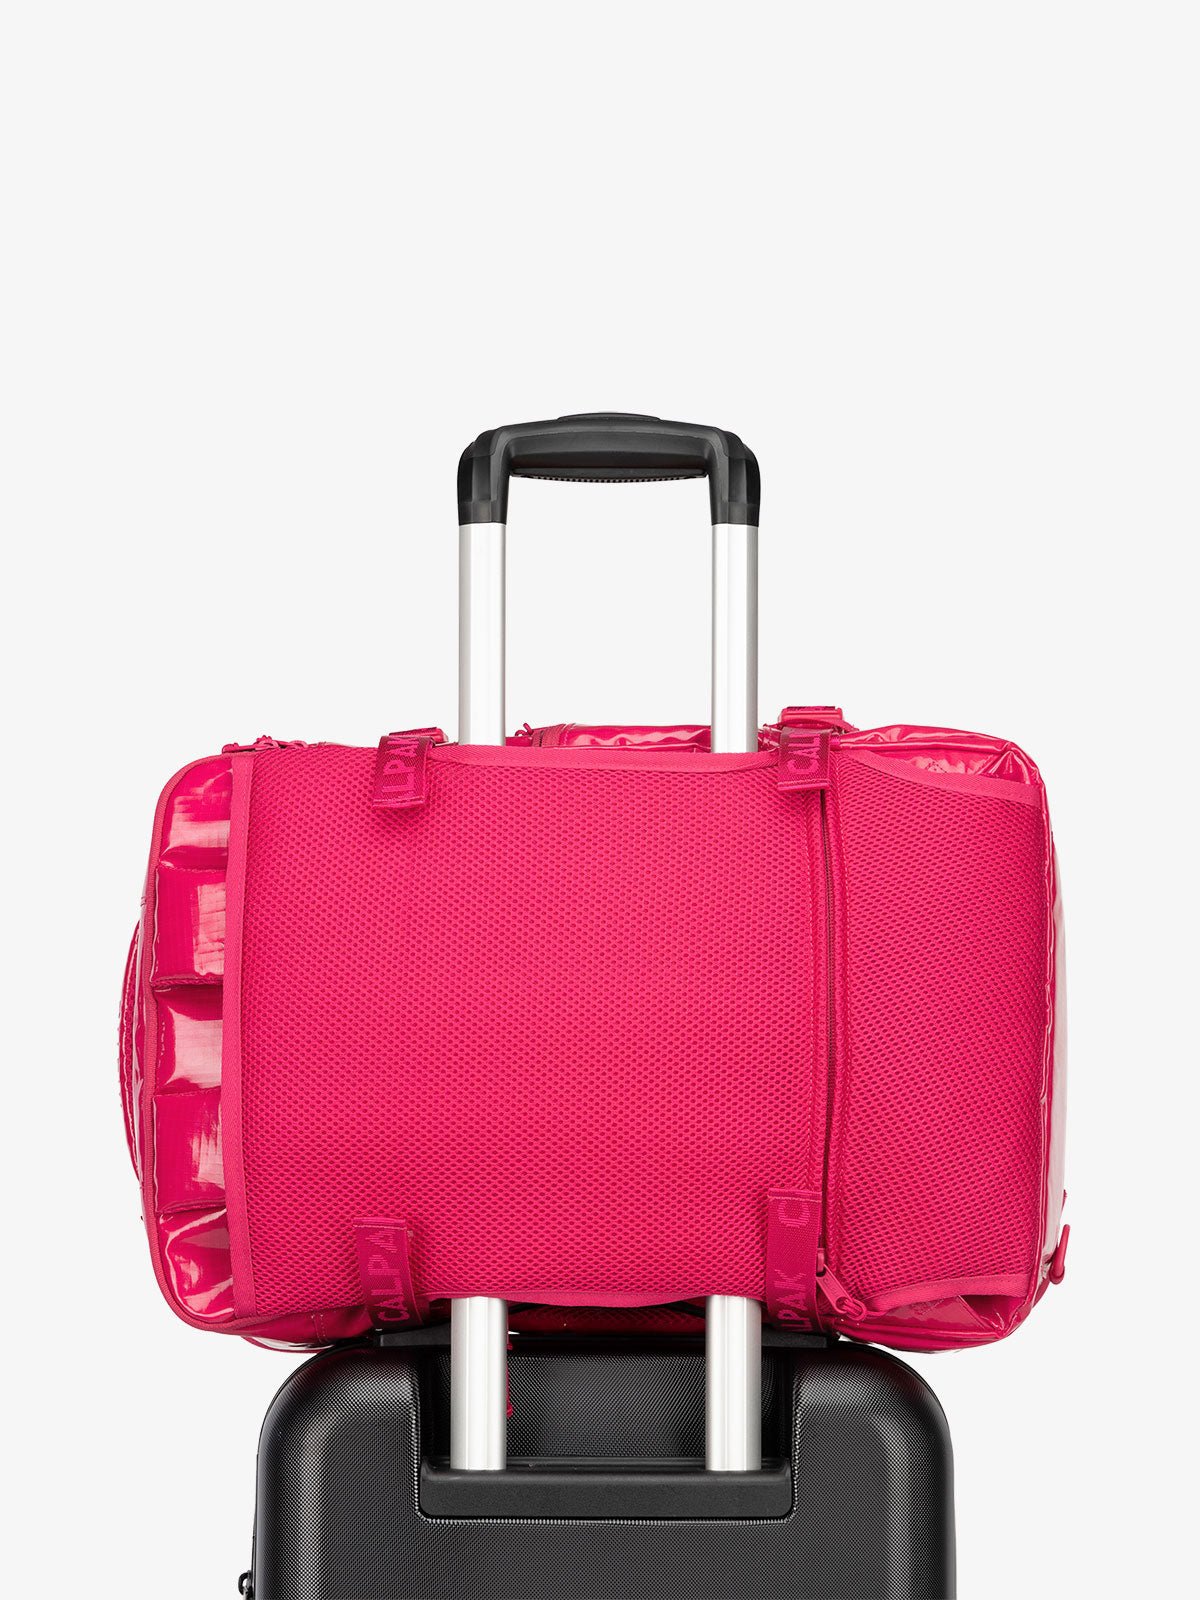 CALPAK Terra 26L Laptop Backpack Duffel with luggage trolley sleeve in dragonfruit pink